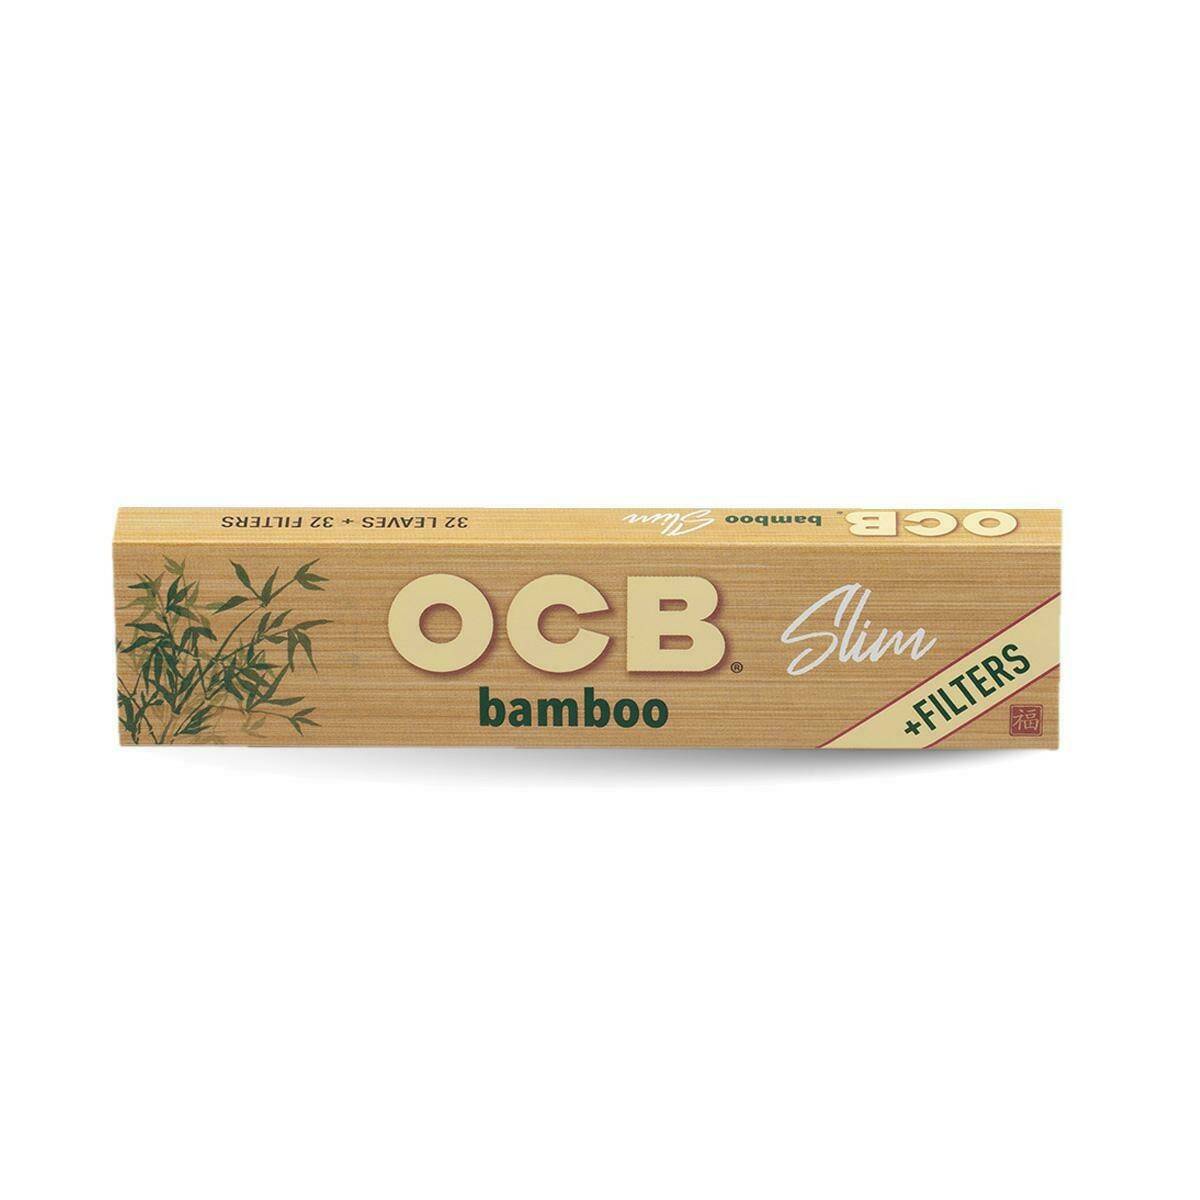 OCB Slim Bamboo + Filters